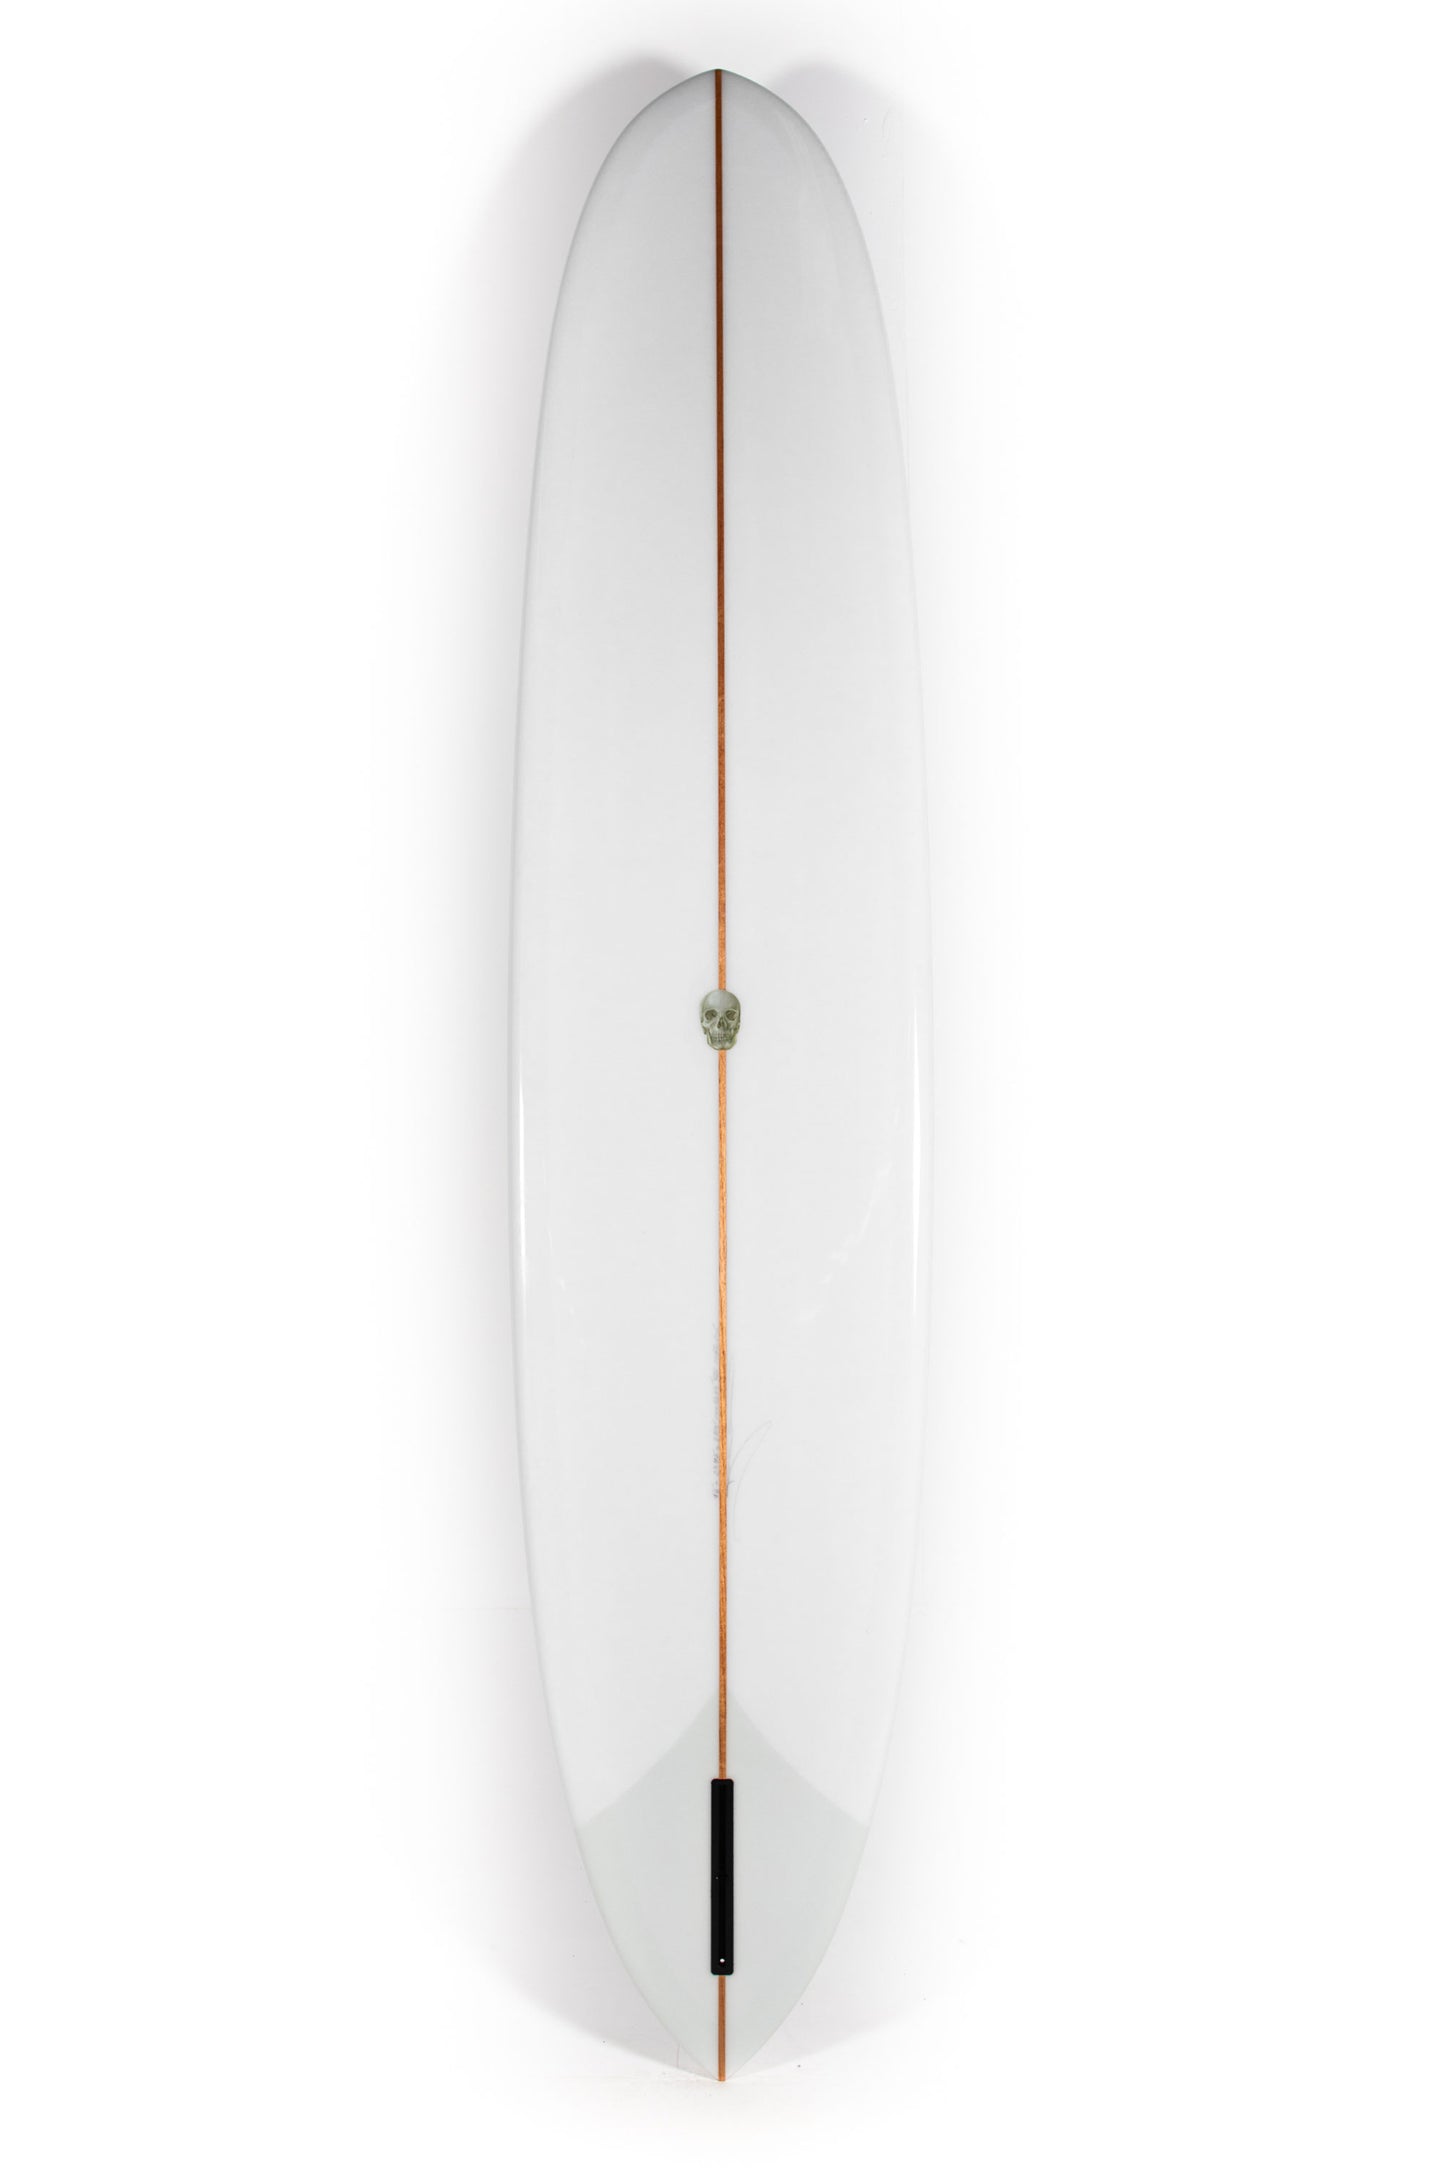 Pukas Surf Shop - Custom Christenson Surfboard  - THE CLIFF PINTAIL by Chris Christenson - 9'0” x 22 7/8 x 2 13/16